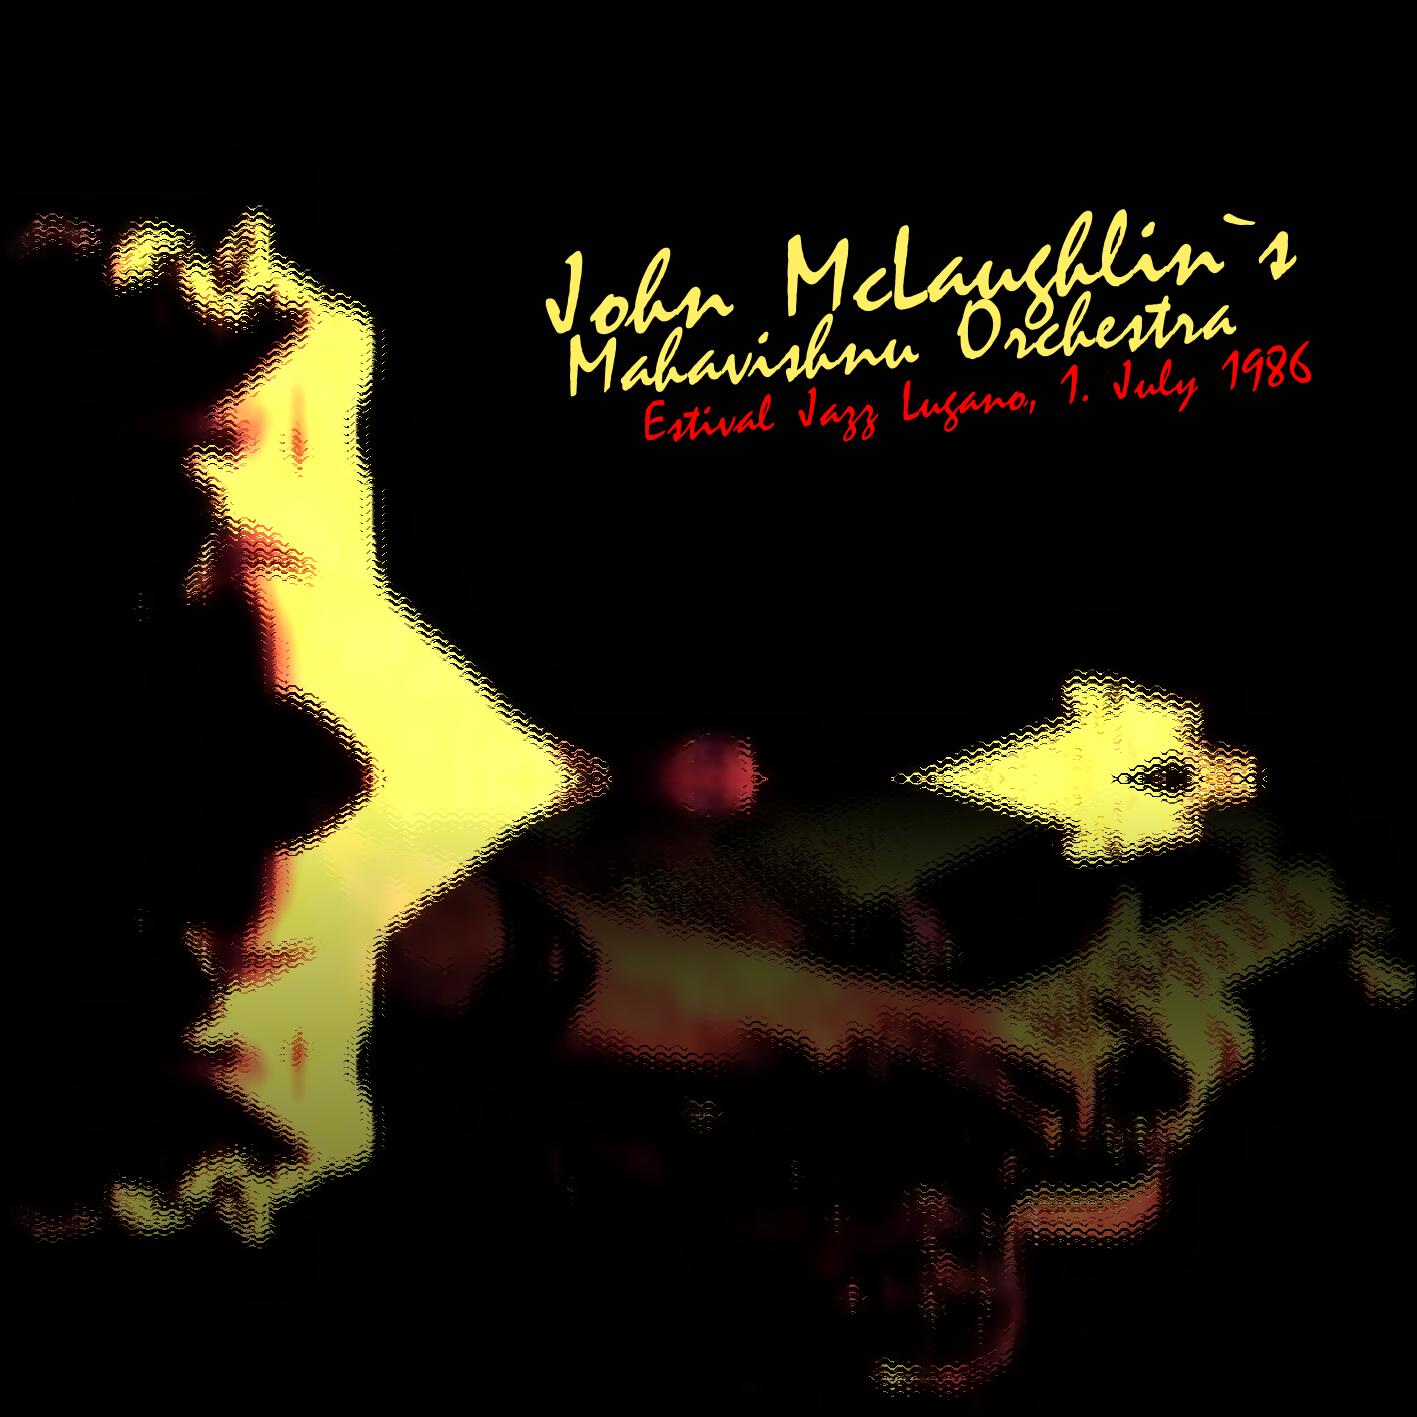 JohnMcLaughlin1986-07-01EstivalJazzLuganoSwitzerland (2).JPG